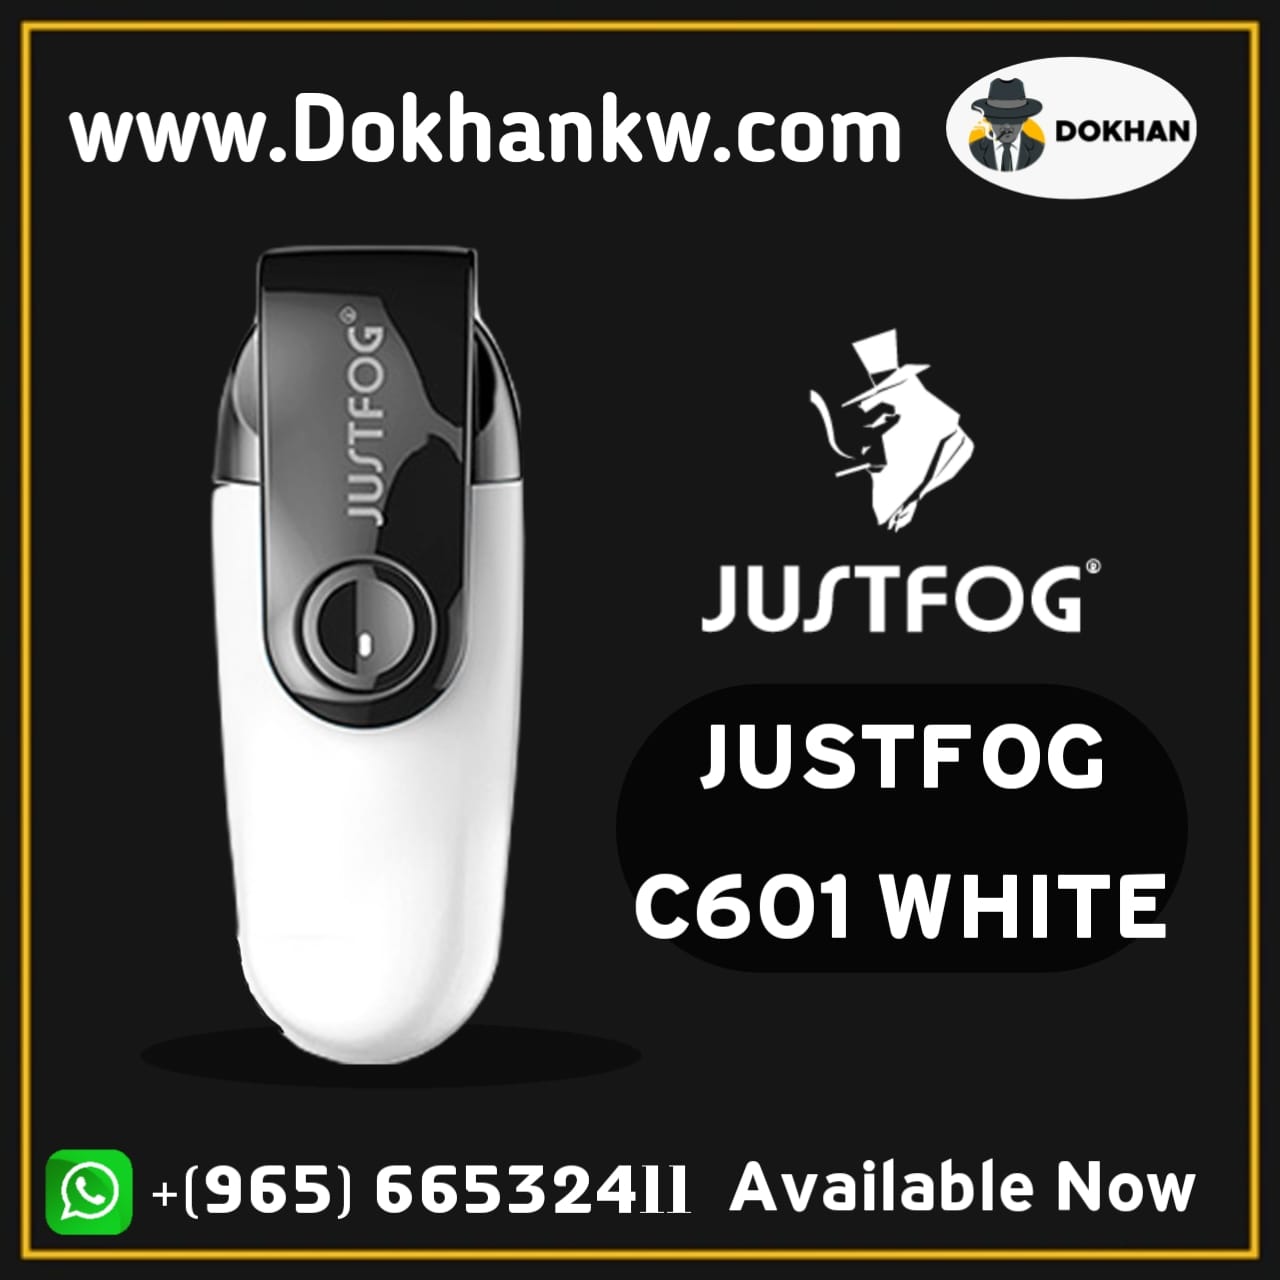 JUSTFOG C601 WHITE